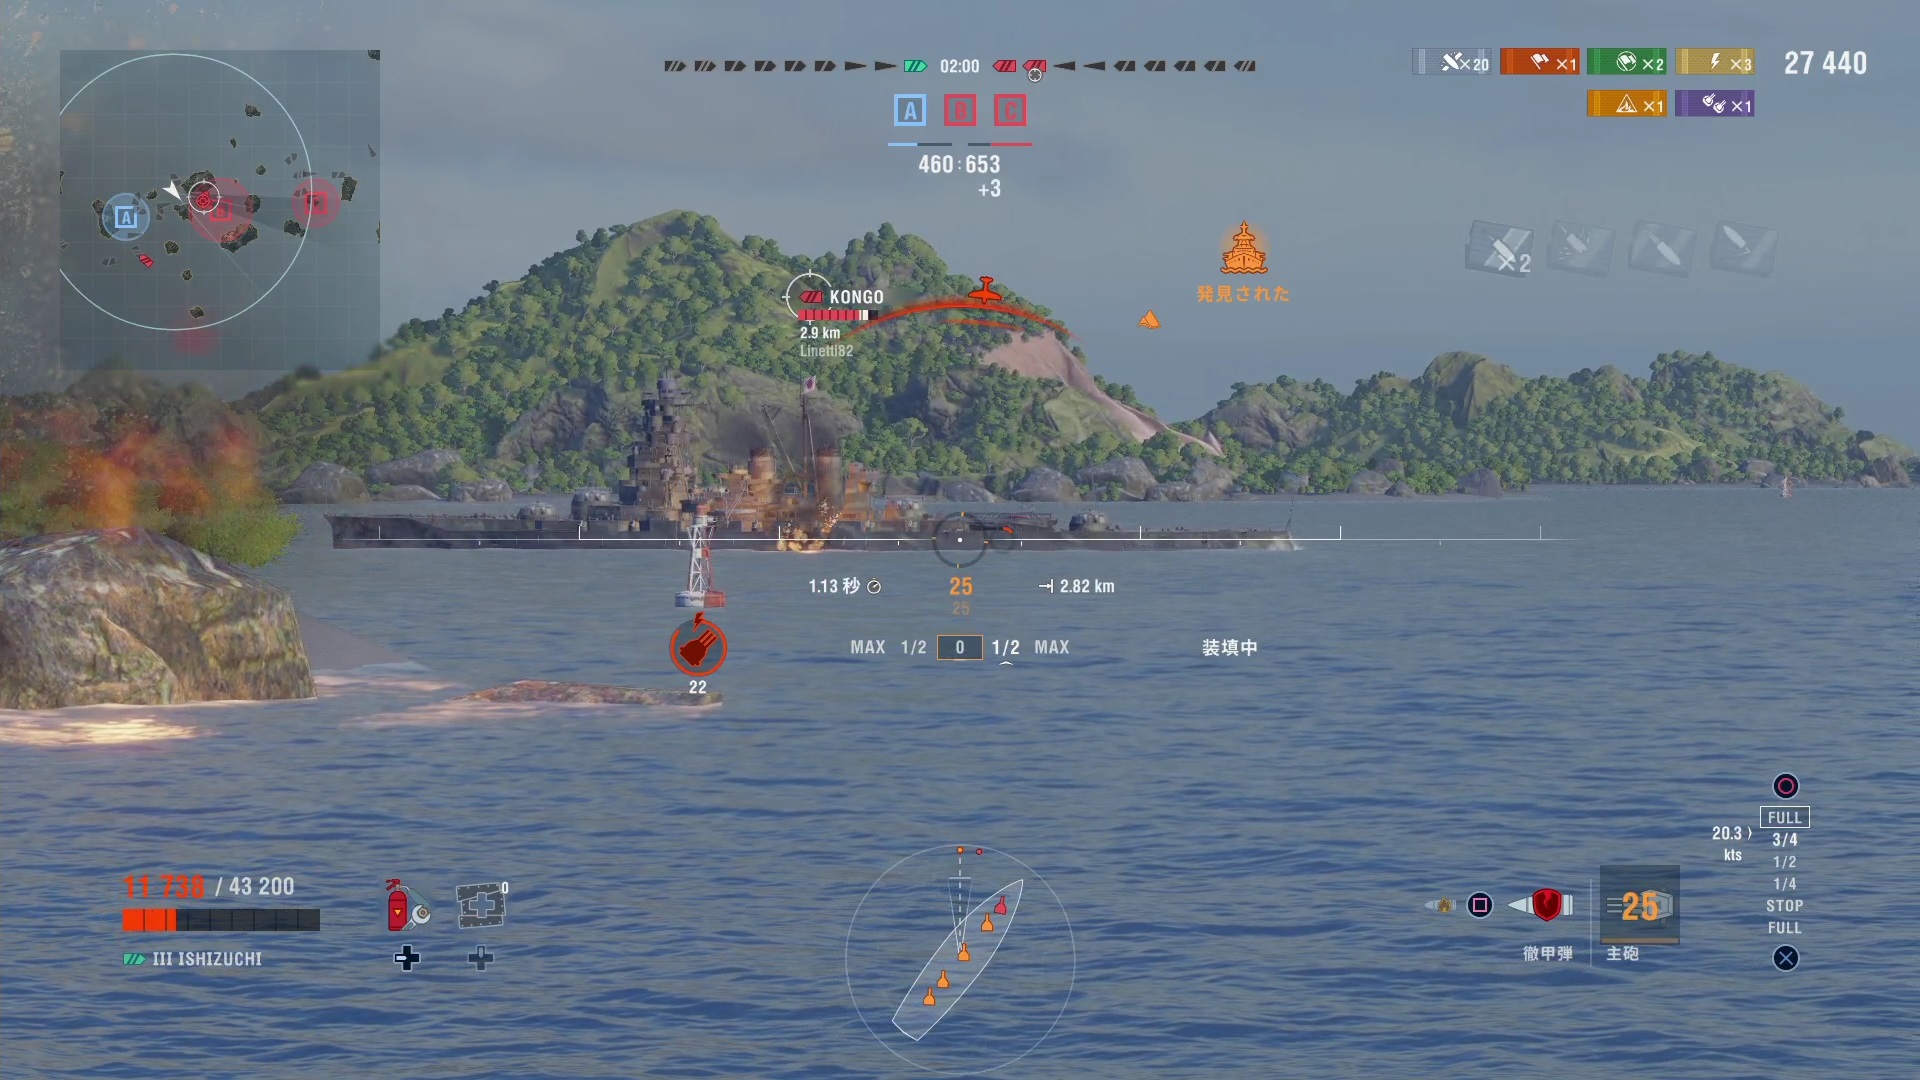 W社海战名作《战舰世界》PS4主机版最新实机截图公开